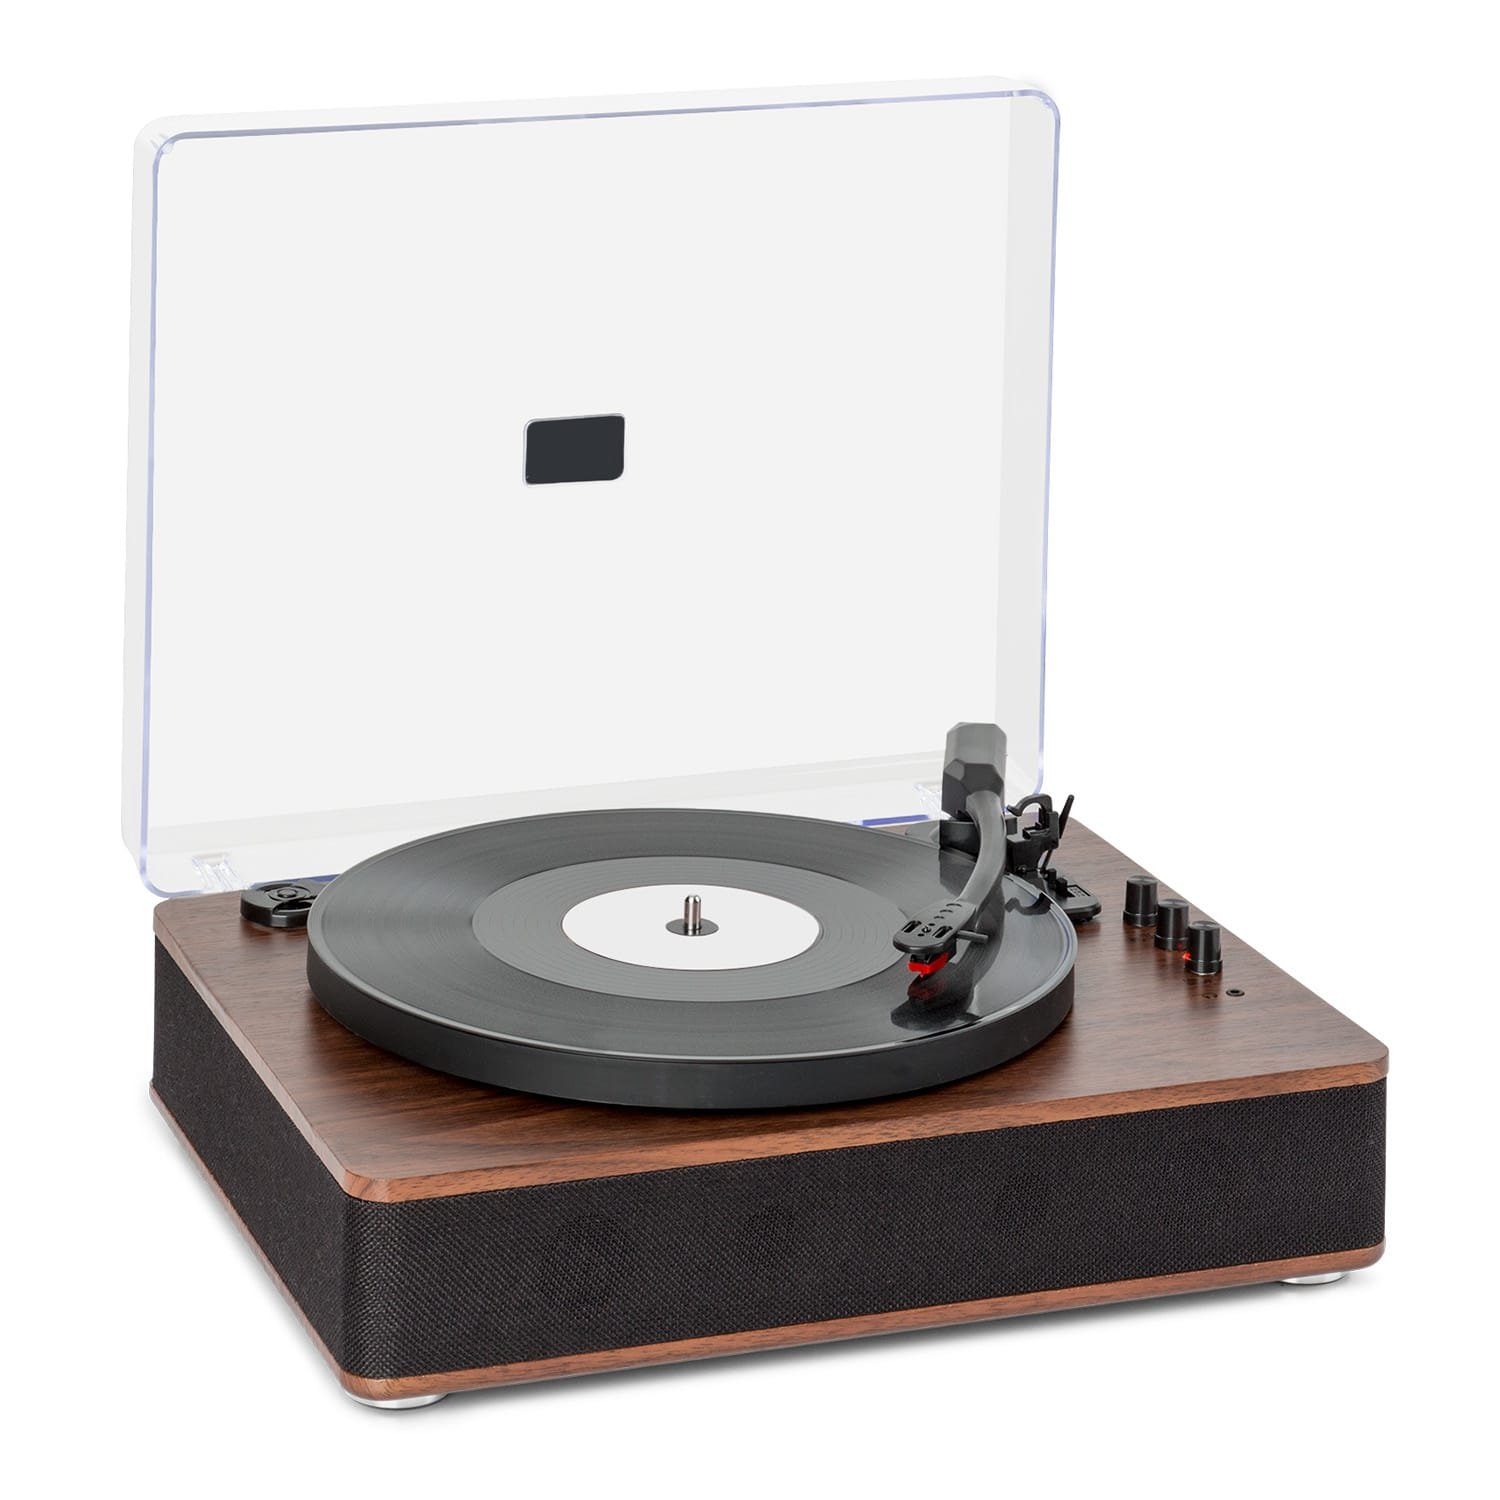 mit Plattenspieler) TT-Classic Vinyl Schallplattenspieler Bluetooth, Auna Lautsprecher Plus (Riemenantrieb, Plattenspieler